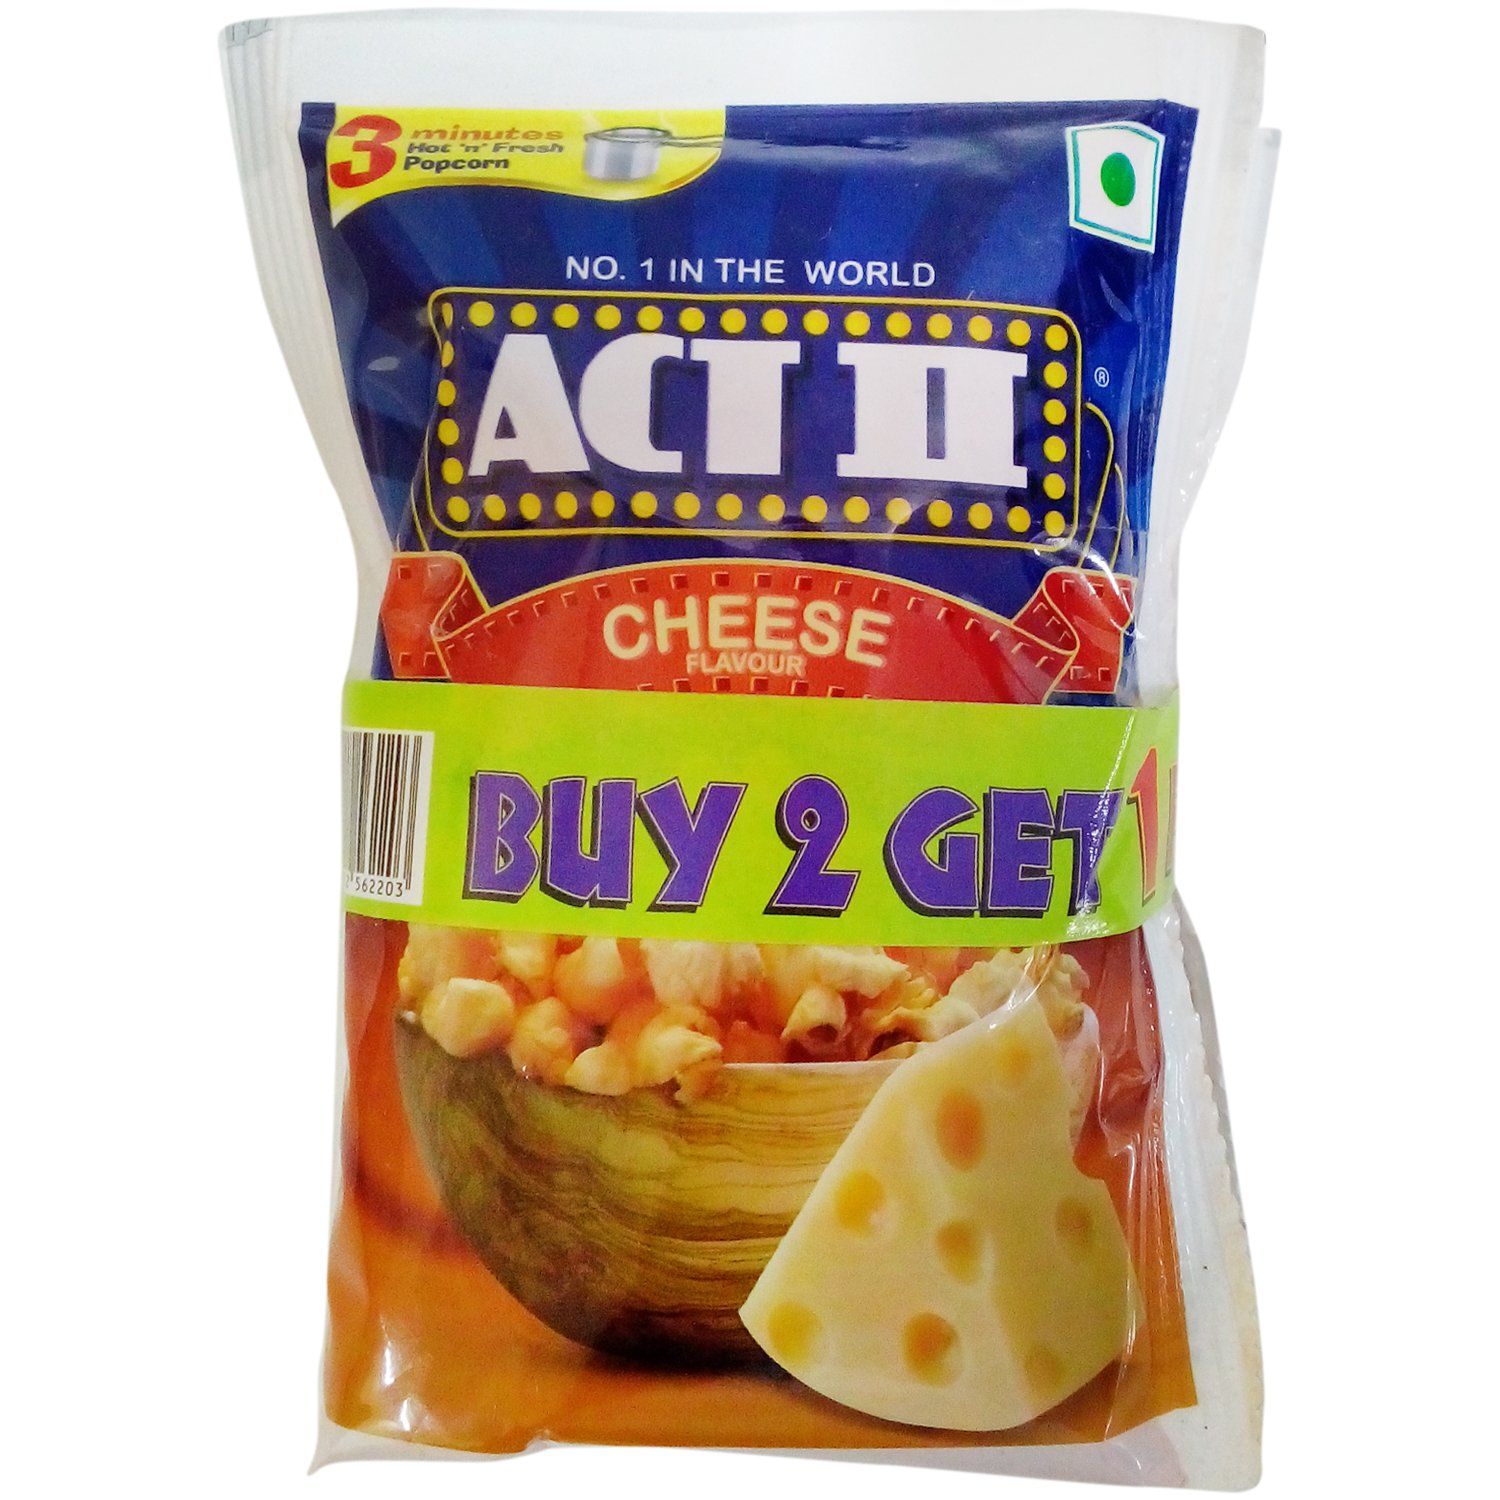 Act II Instant Popcorn Cheese Image